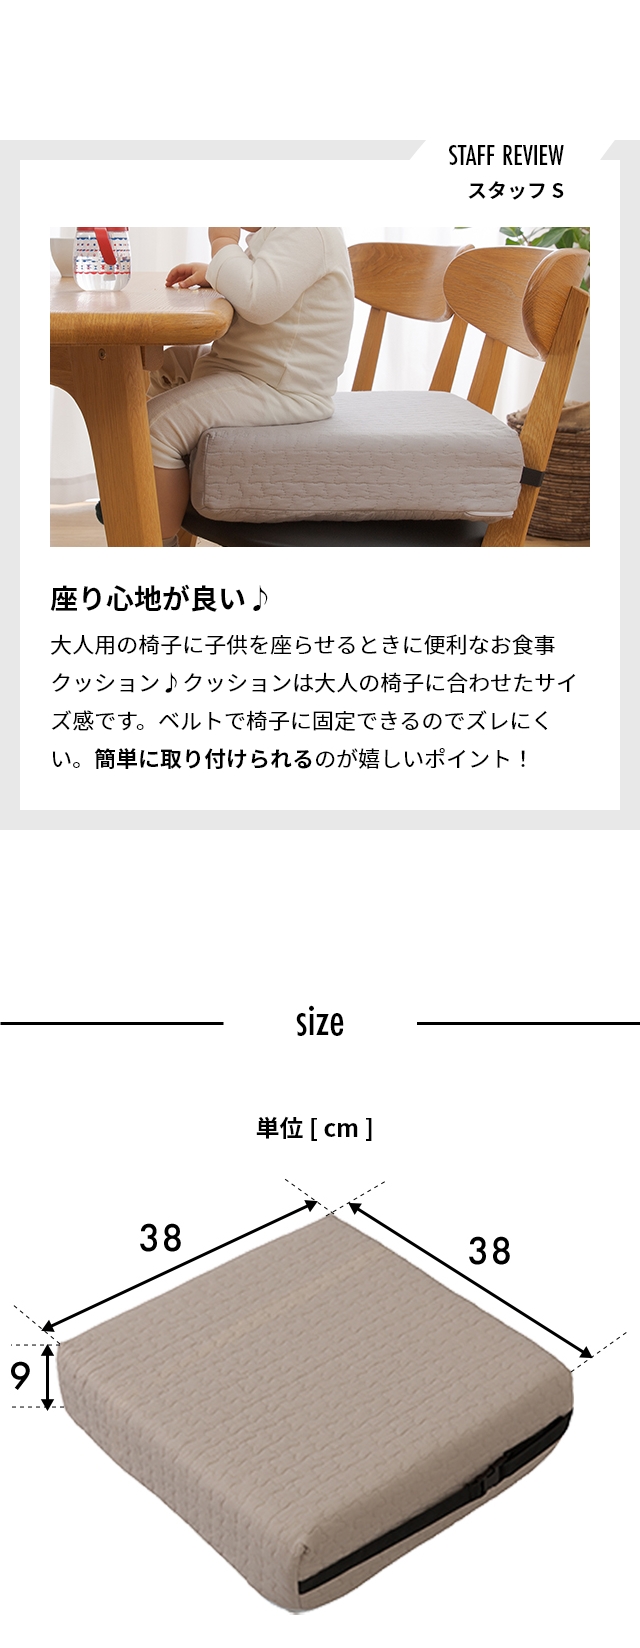 mofua(モフア) イブル CLOUD柄 高さ調節ができるキッズ用のお食事クッション